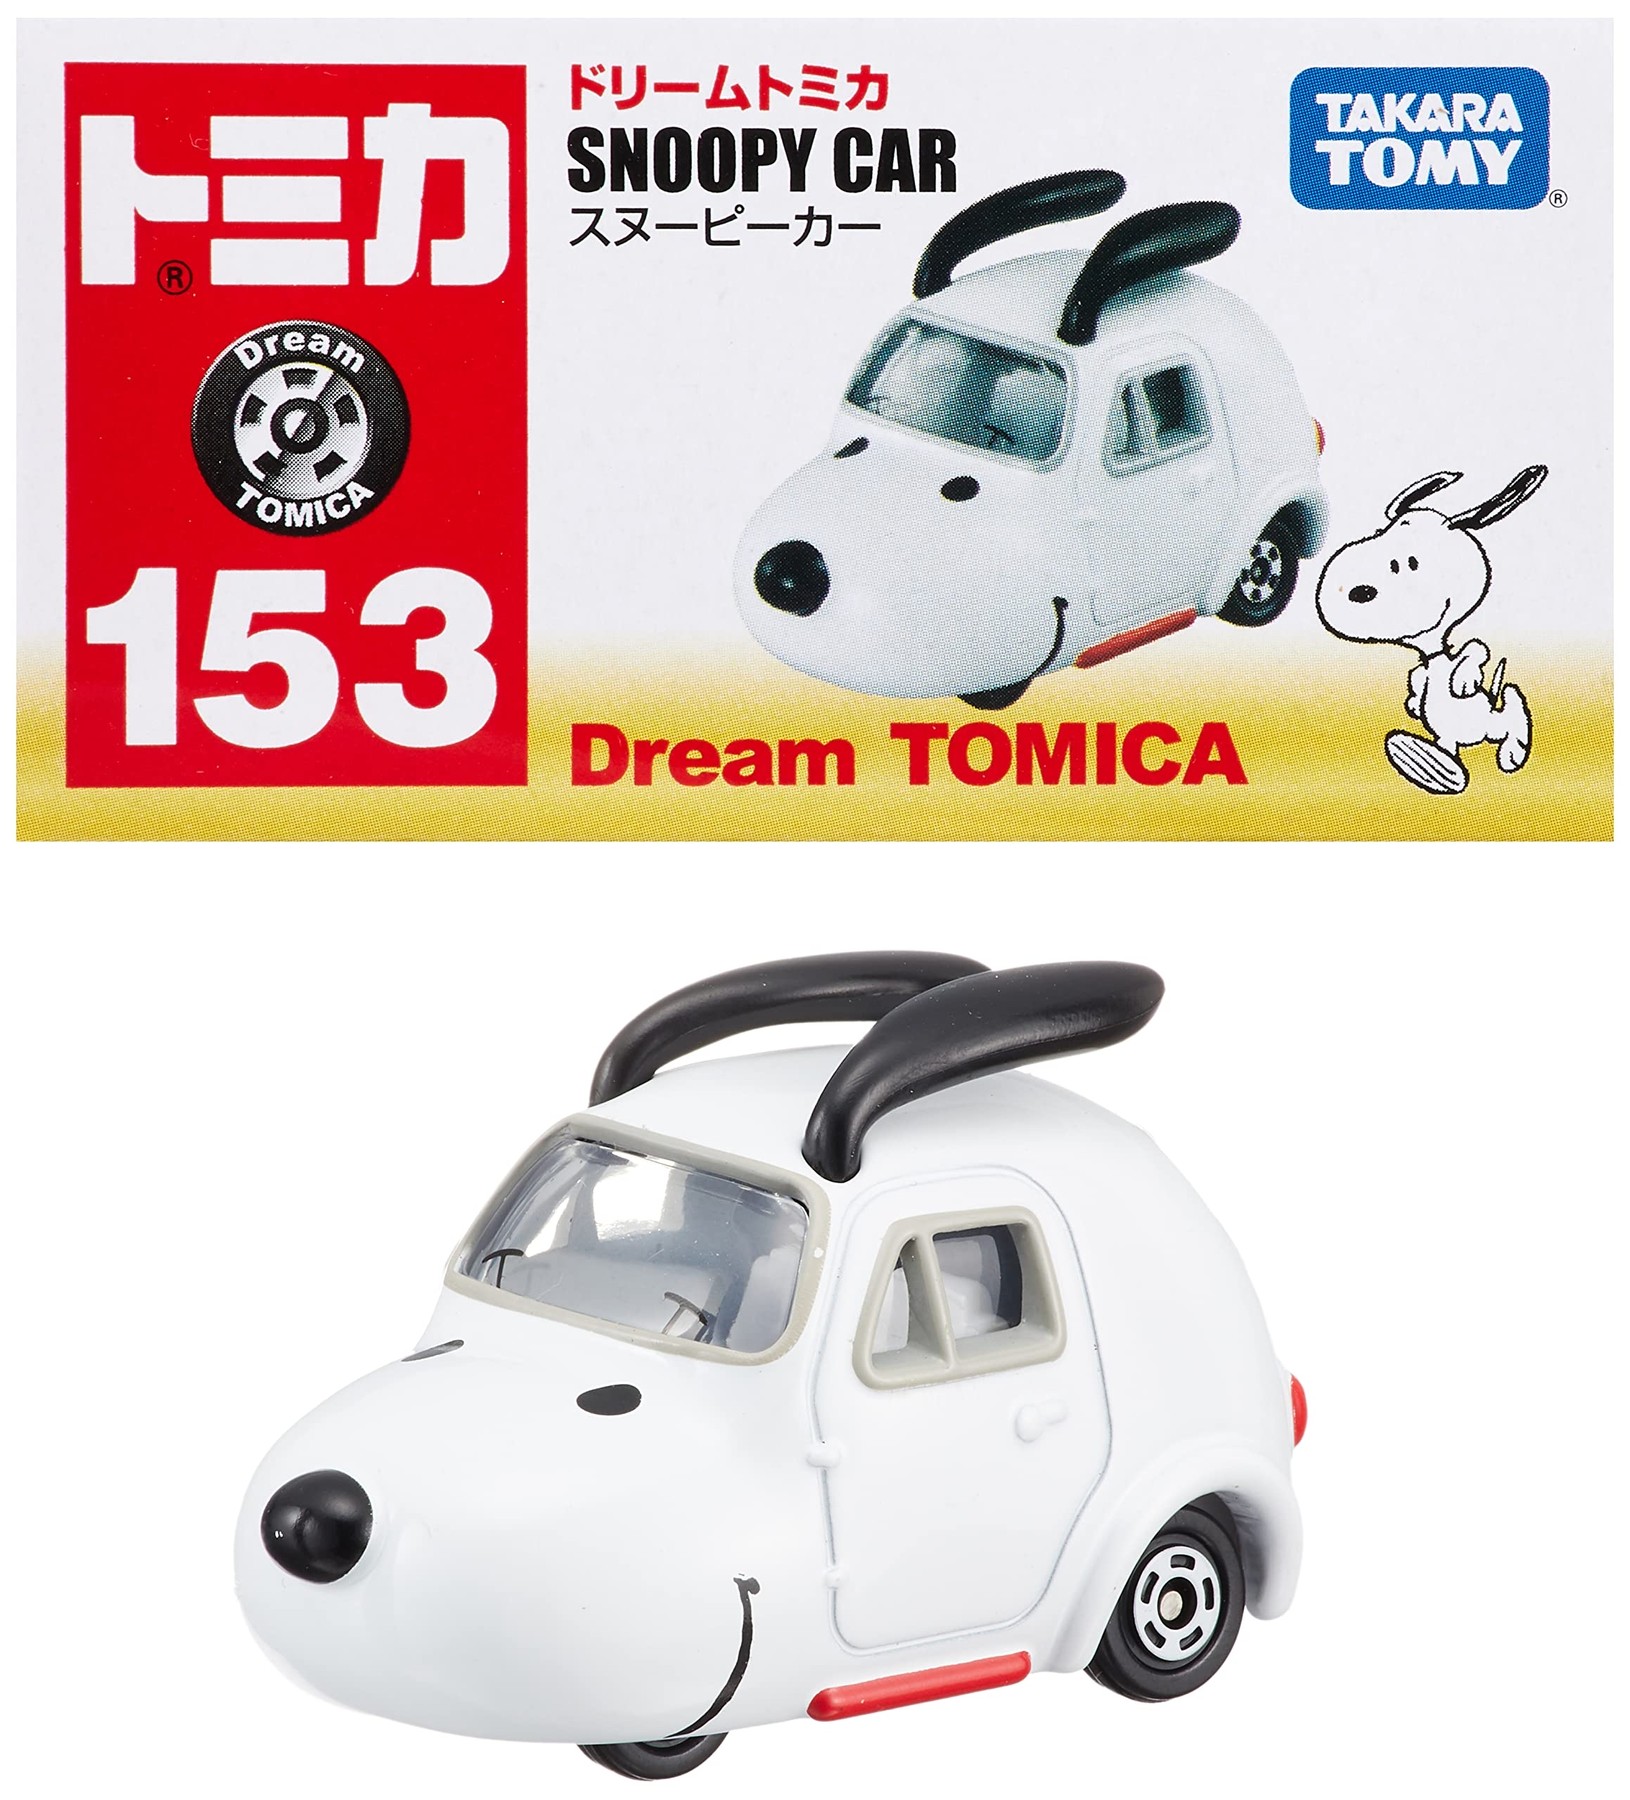 TAKARA TOMY Tomica Dream Tomica No.153 Snoopy car